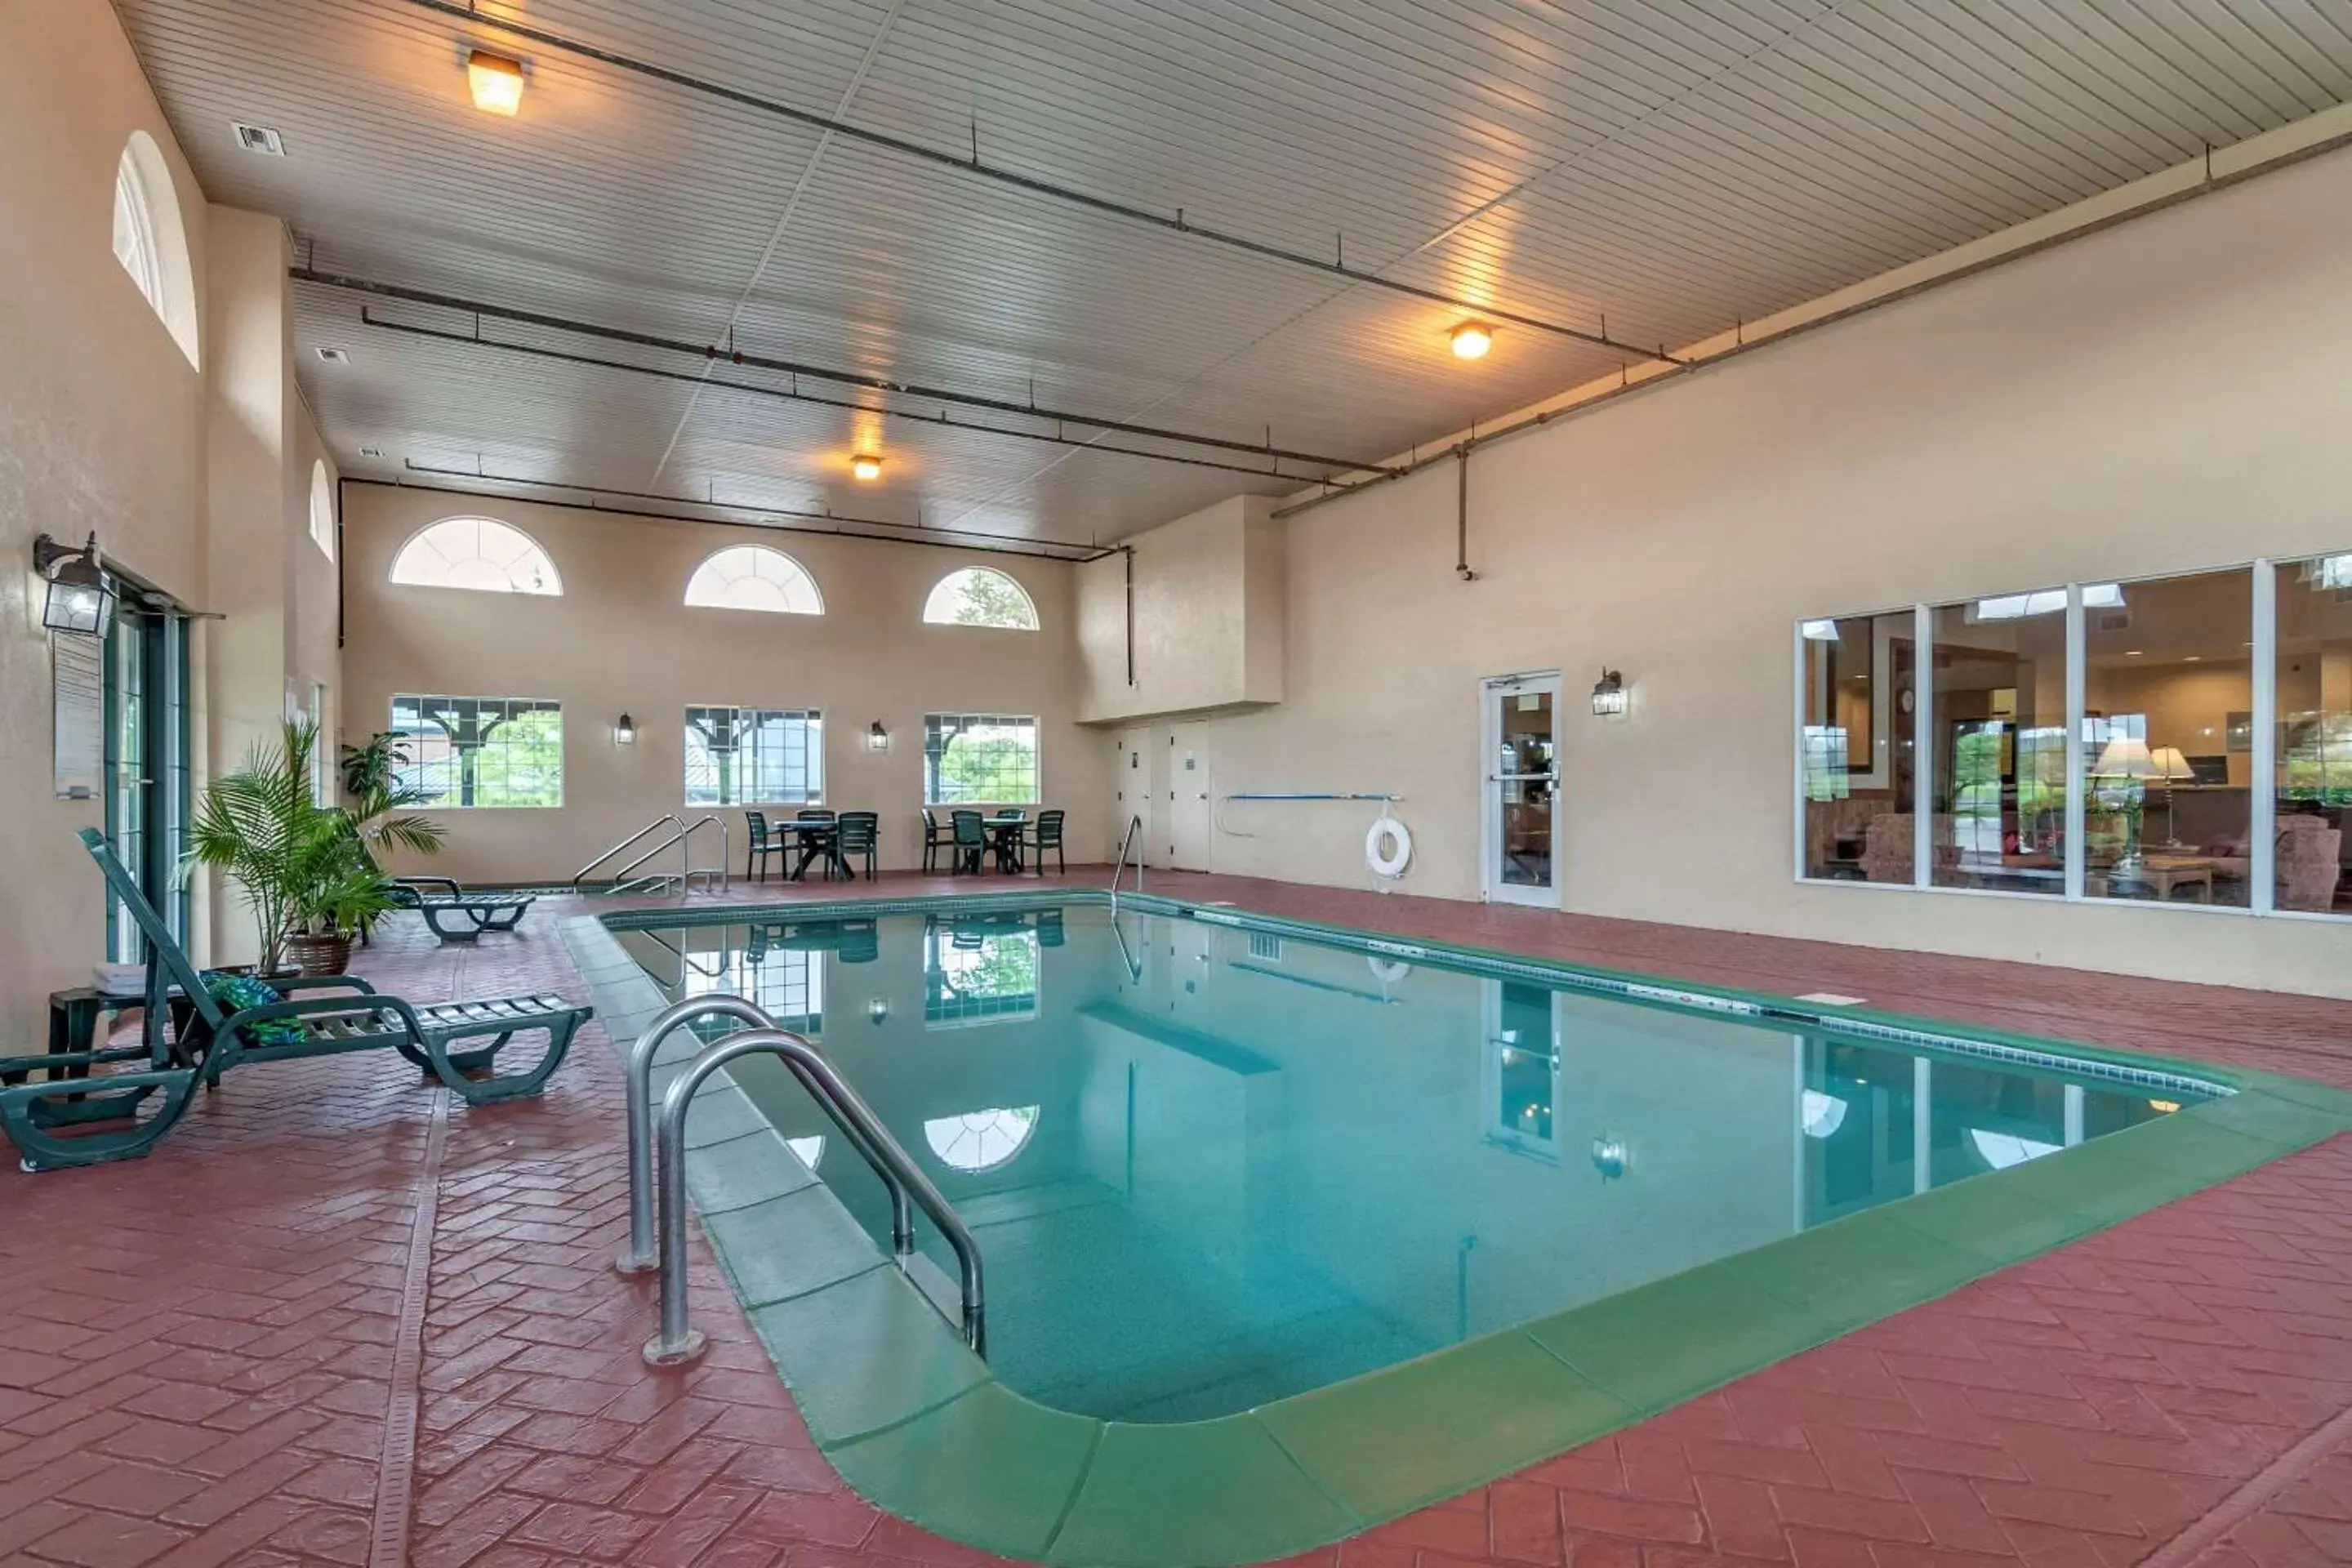 On site, Swimming Pool in Comfort Inn Warrensburg Station